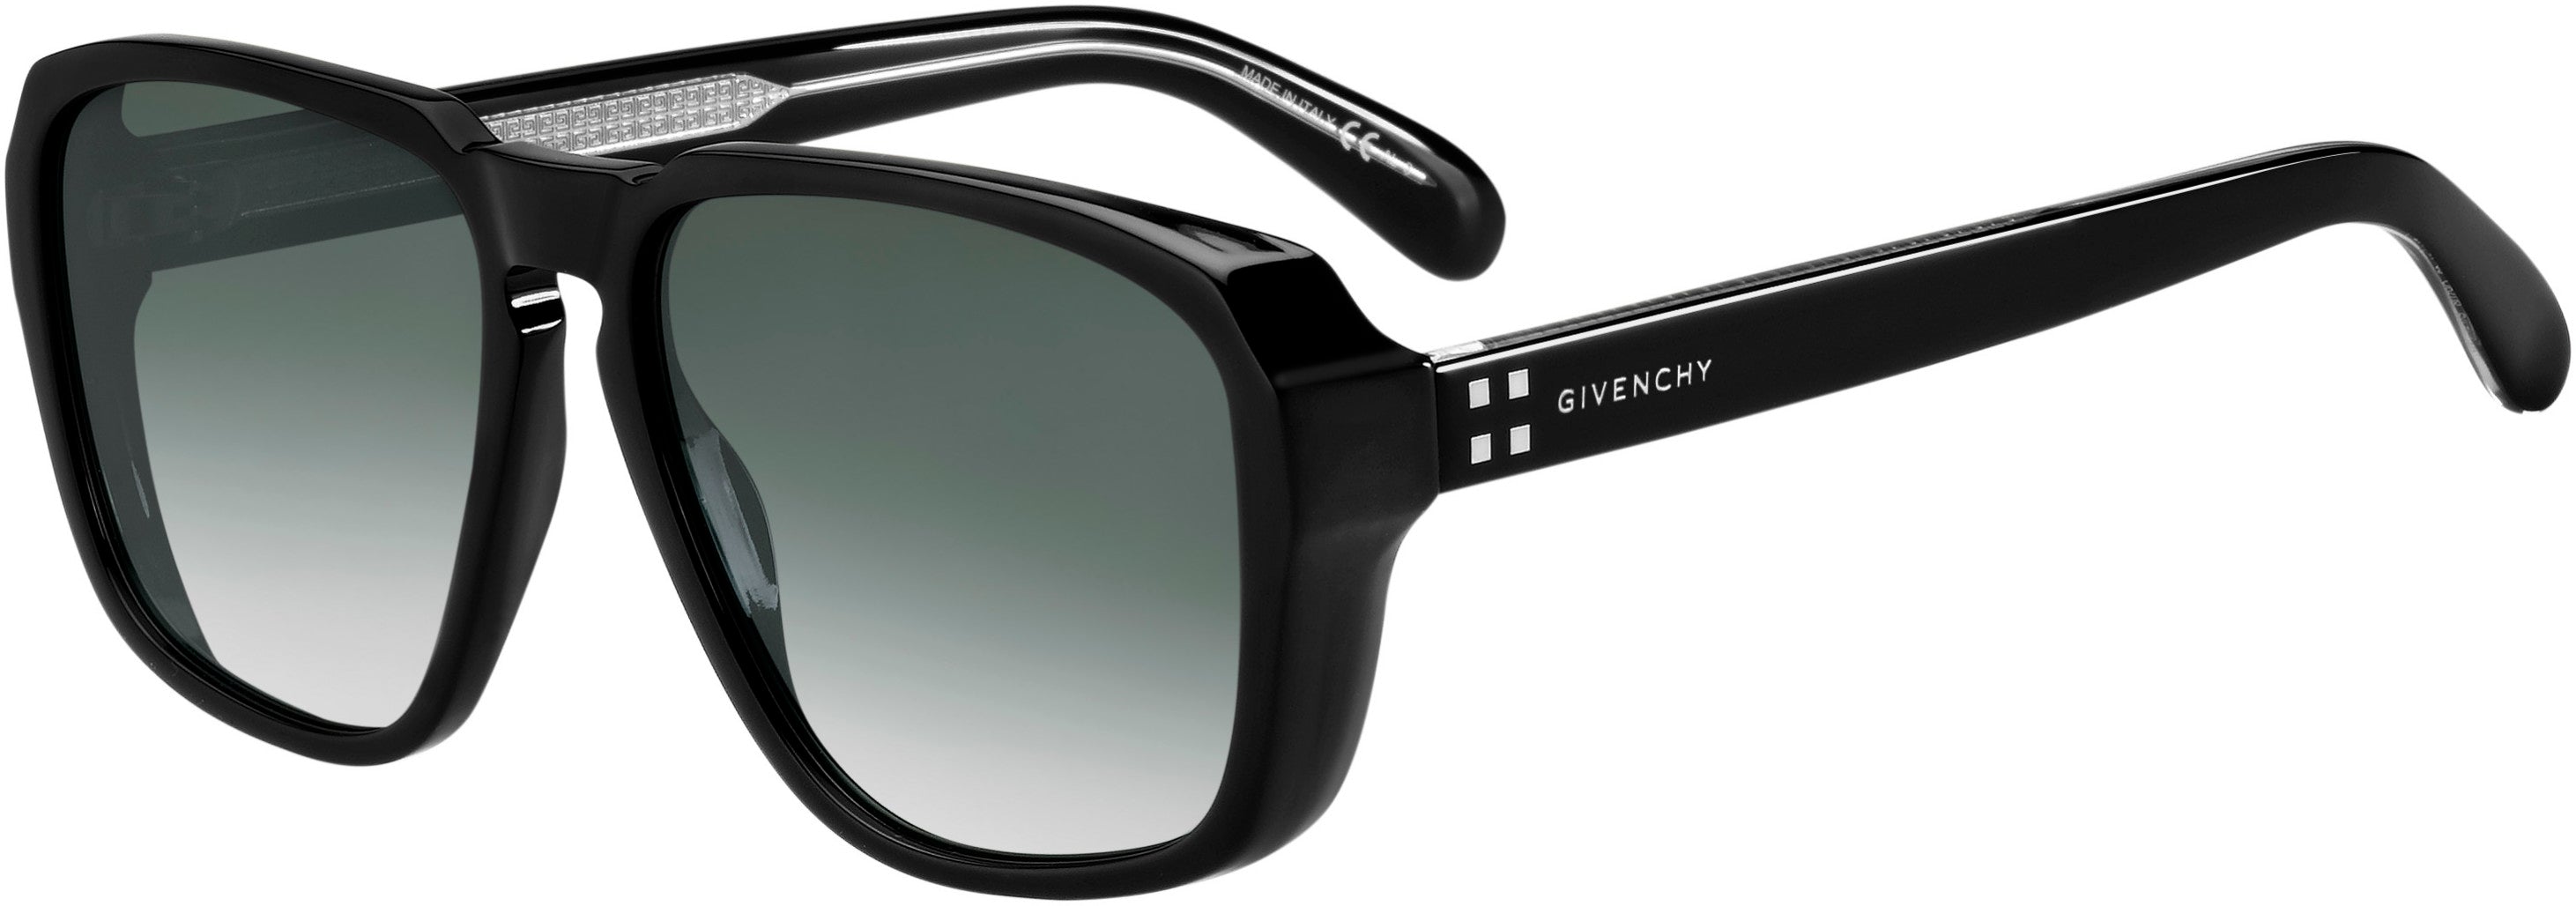  Givenchy 7121/S Navigator Sunglasses 0807-0807  Black (9O Dark Gray Gradient)